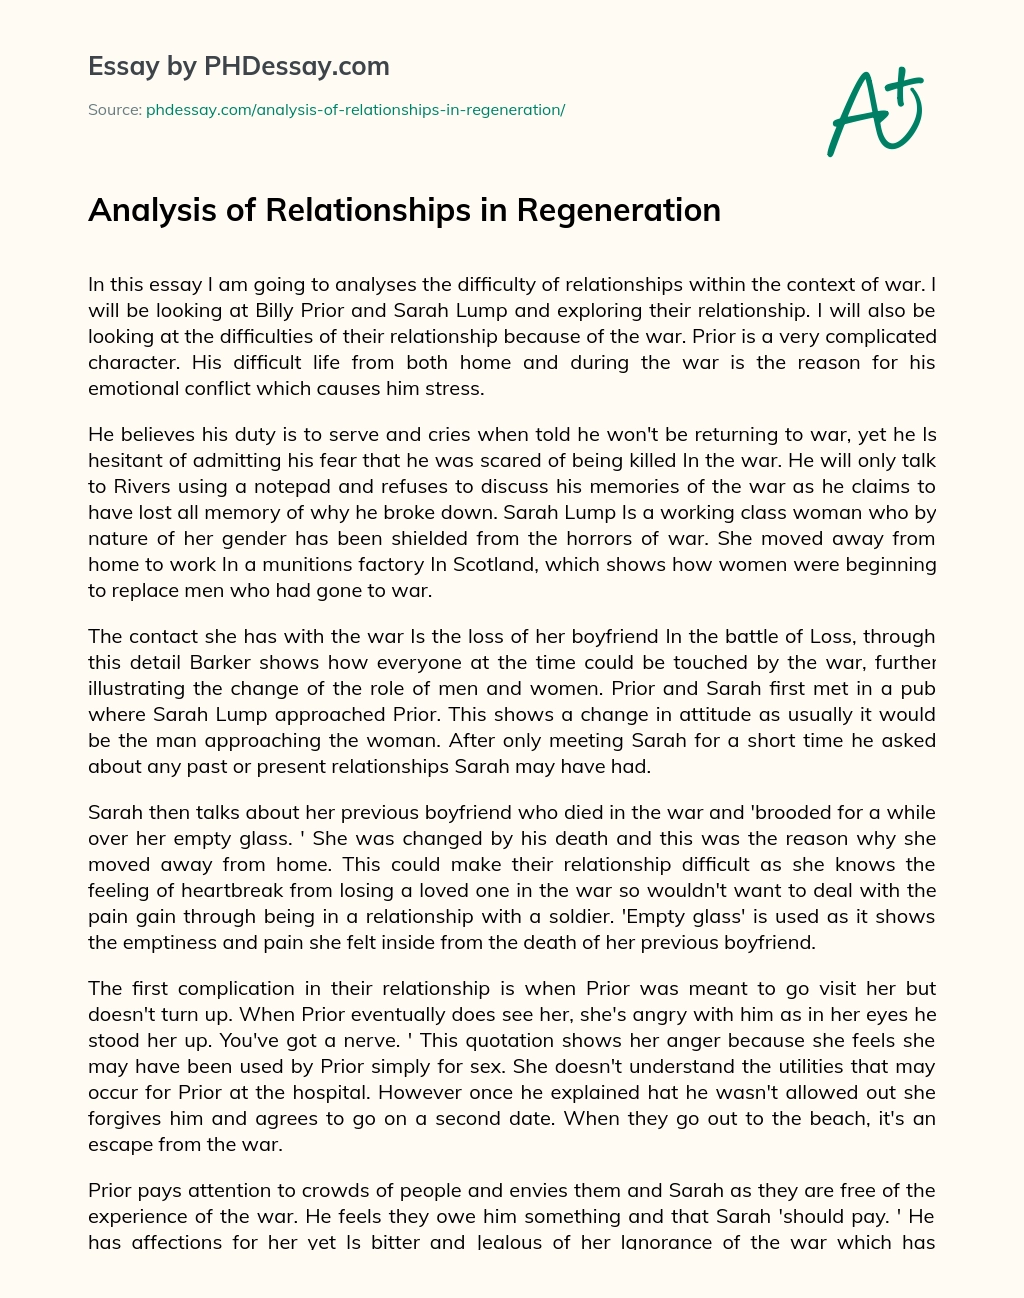 Analysis of Relationships in Regeneration essay